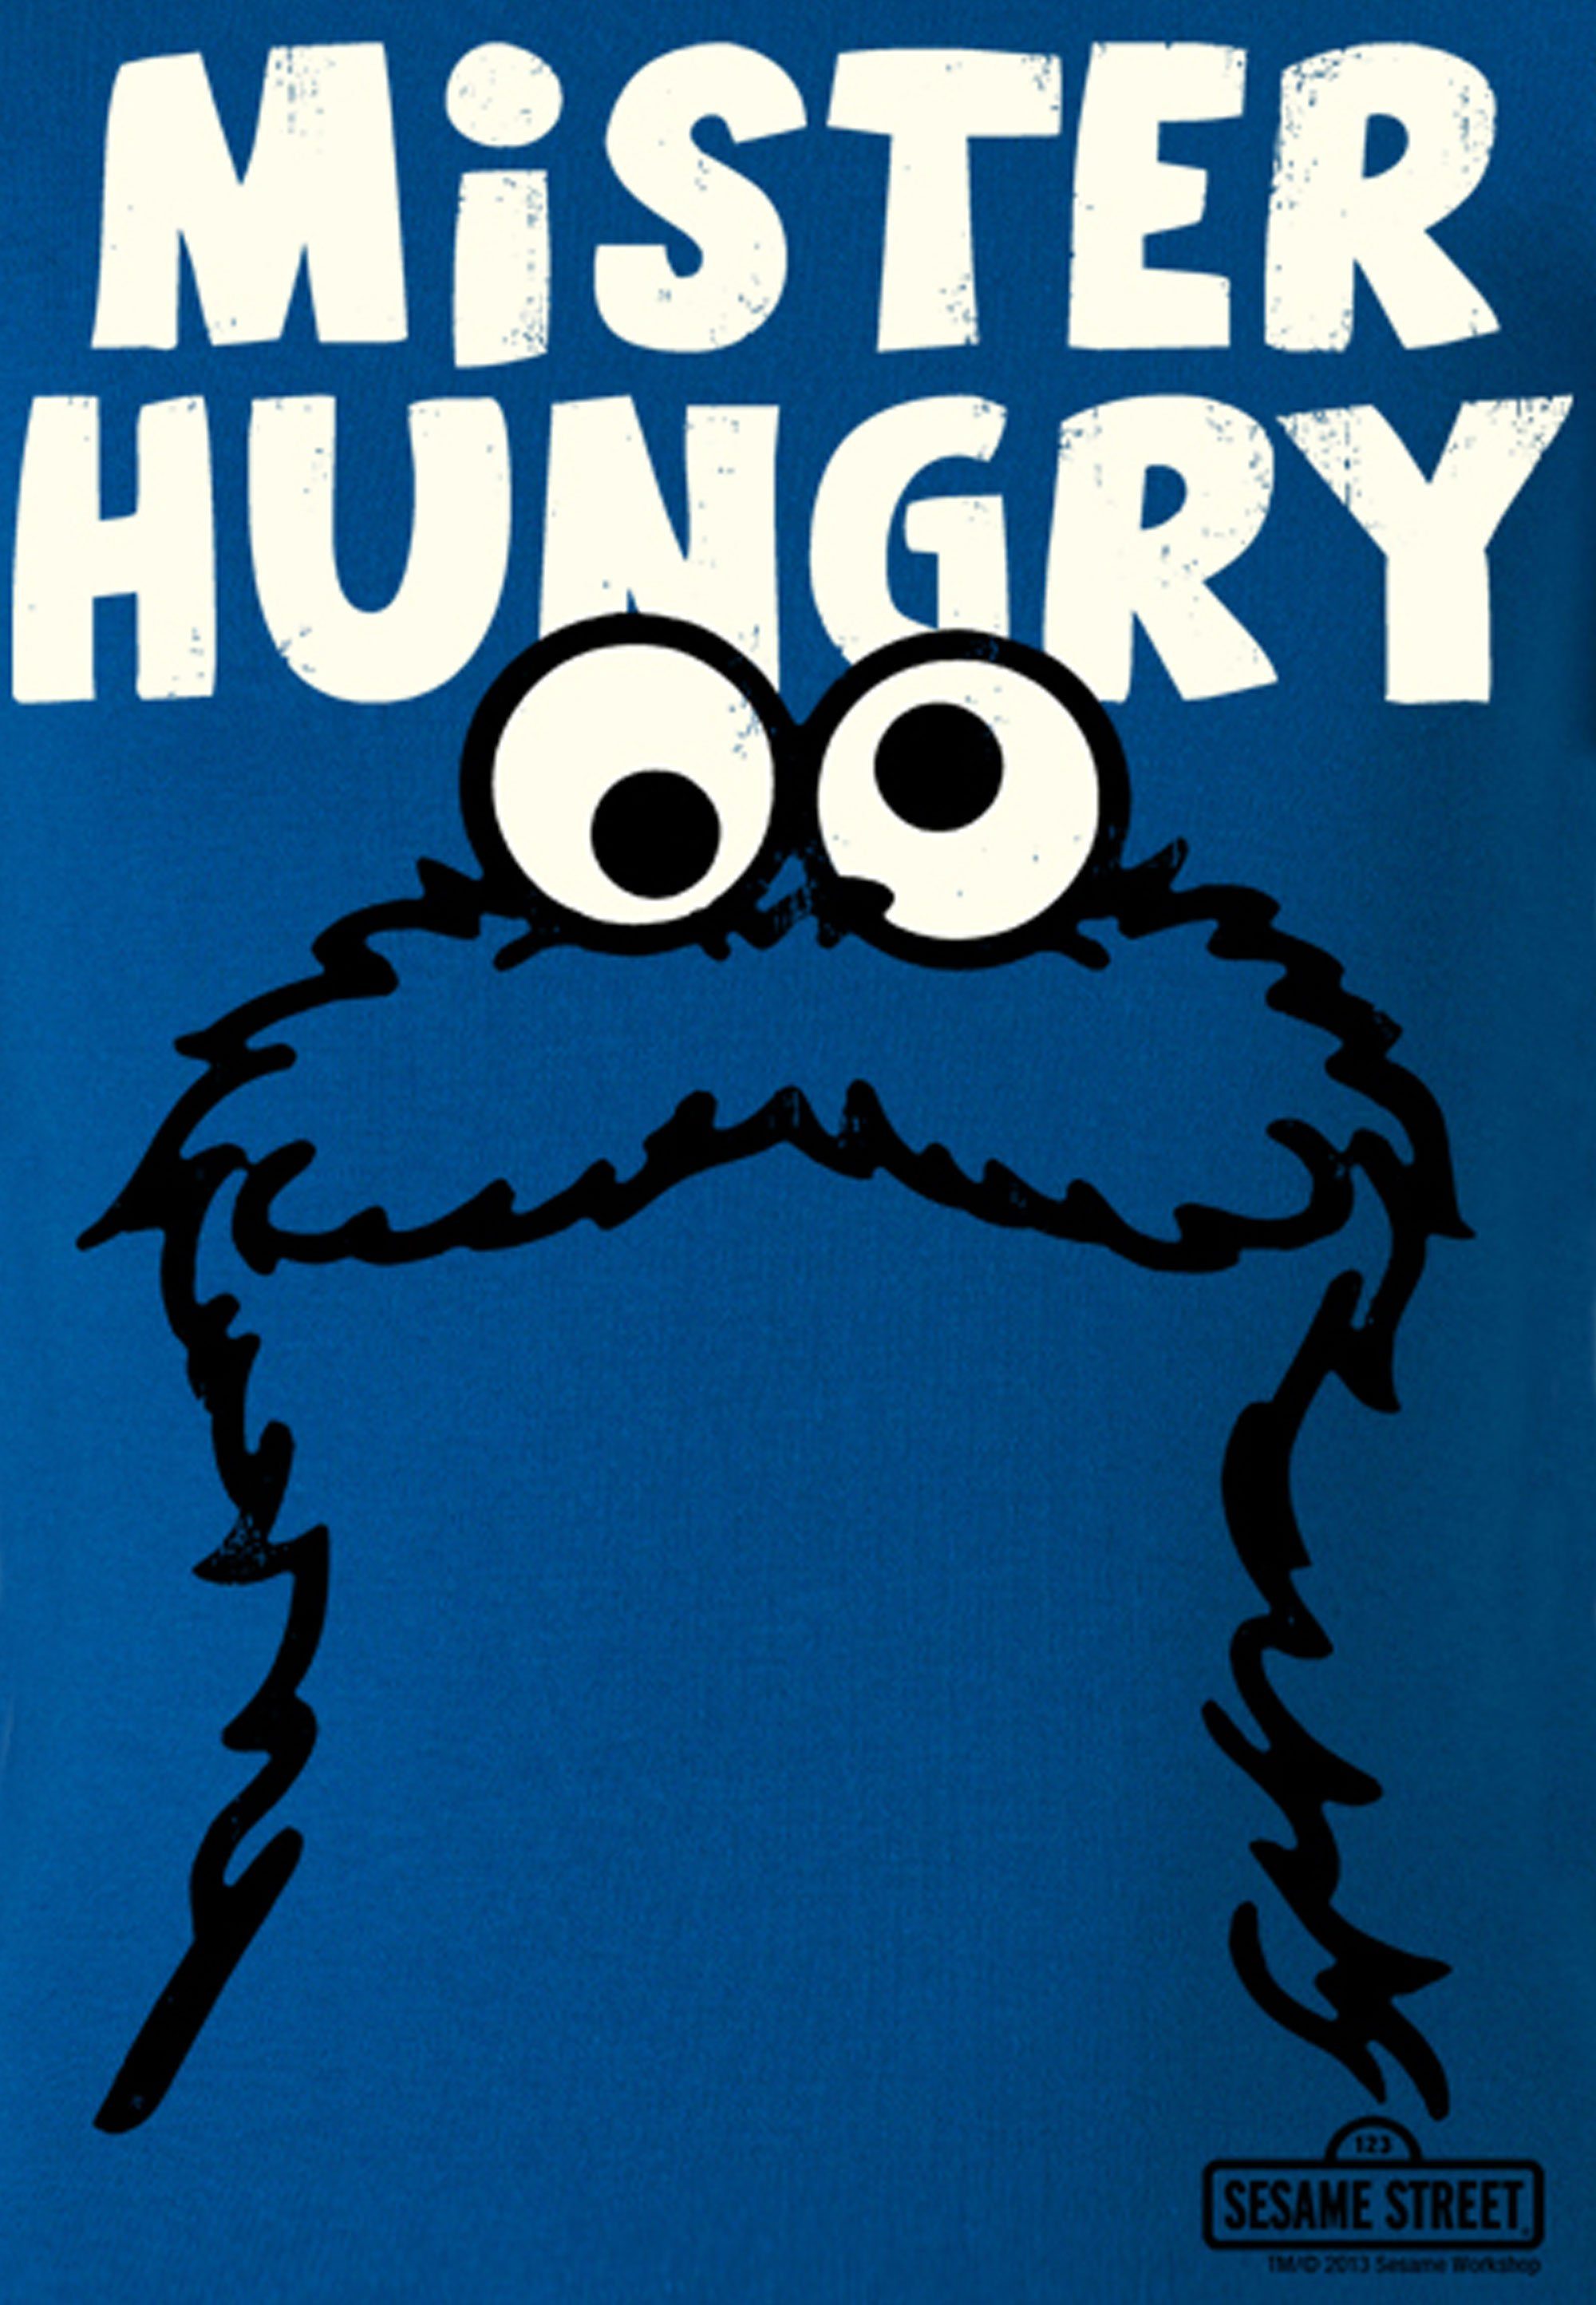 LOGOSHIRT T-Shirt mit Mister tollem Frontprint Hungry